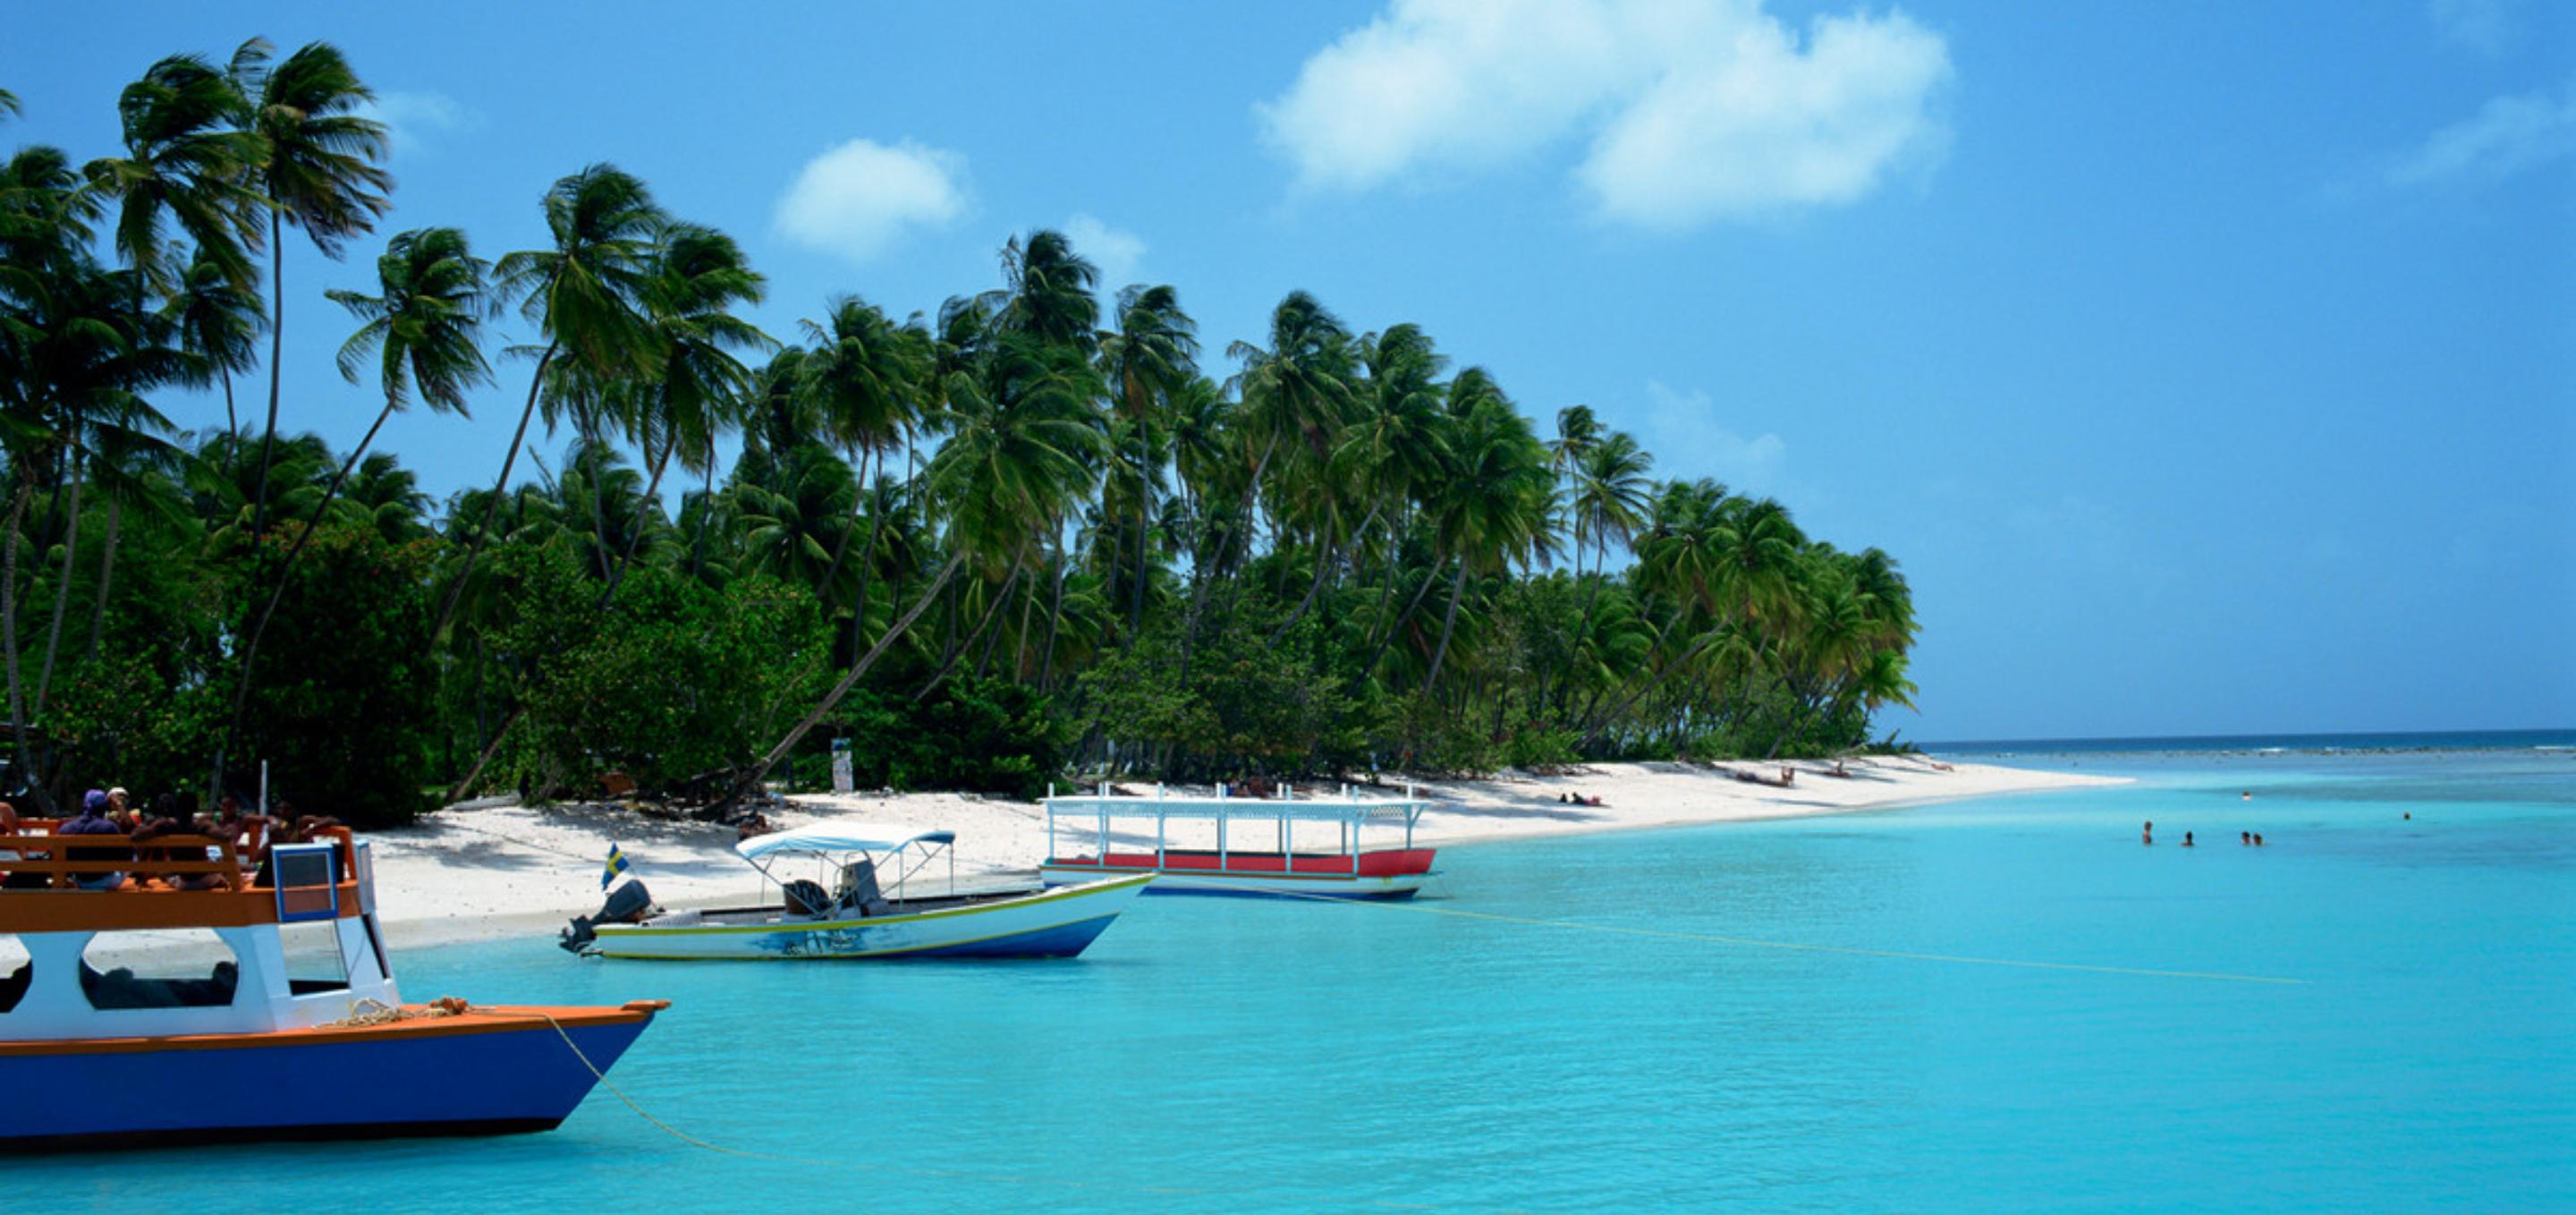 An image showing a beach